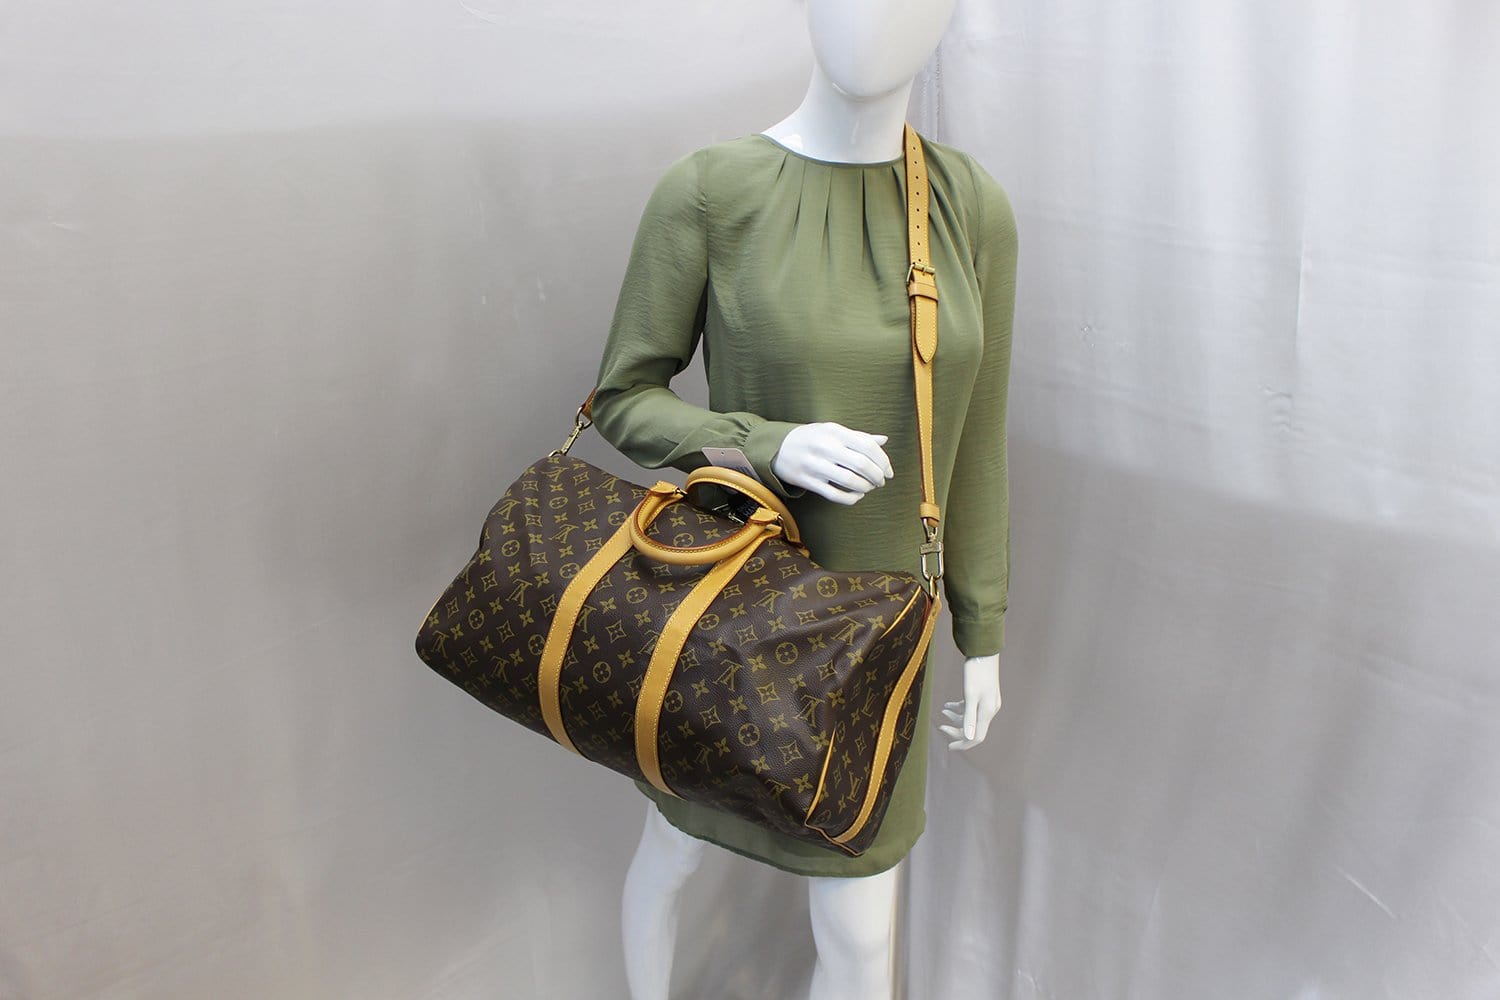 Louis Vuitton Keepall 45 Bandouliere Canvas Travel Bag